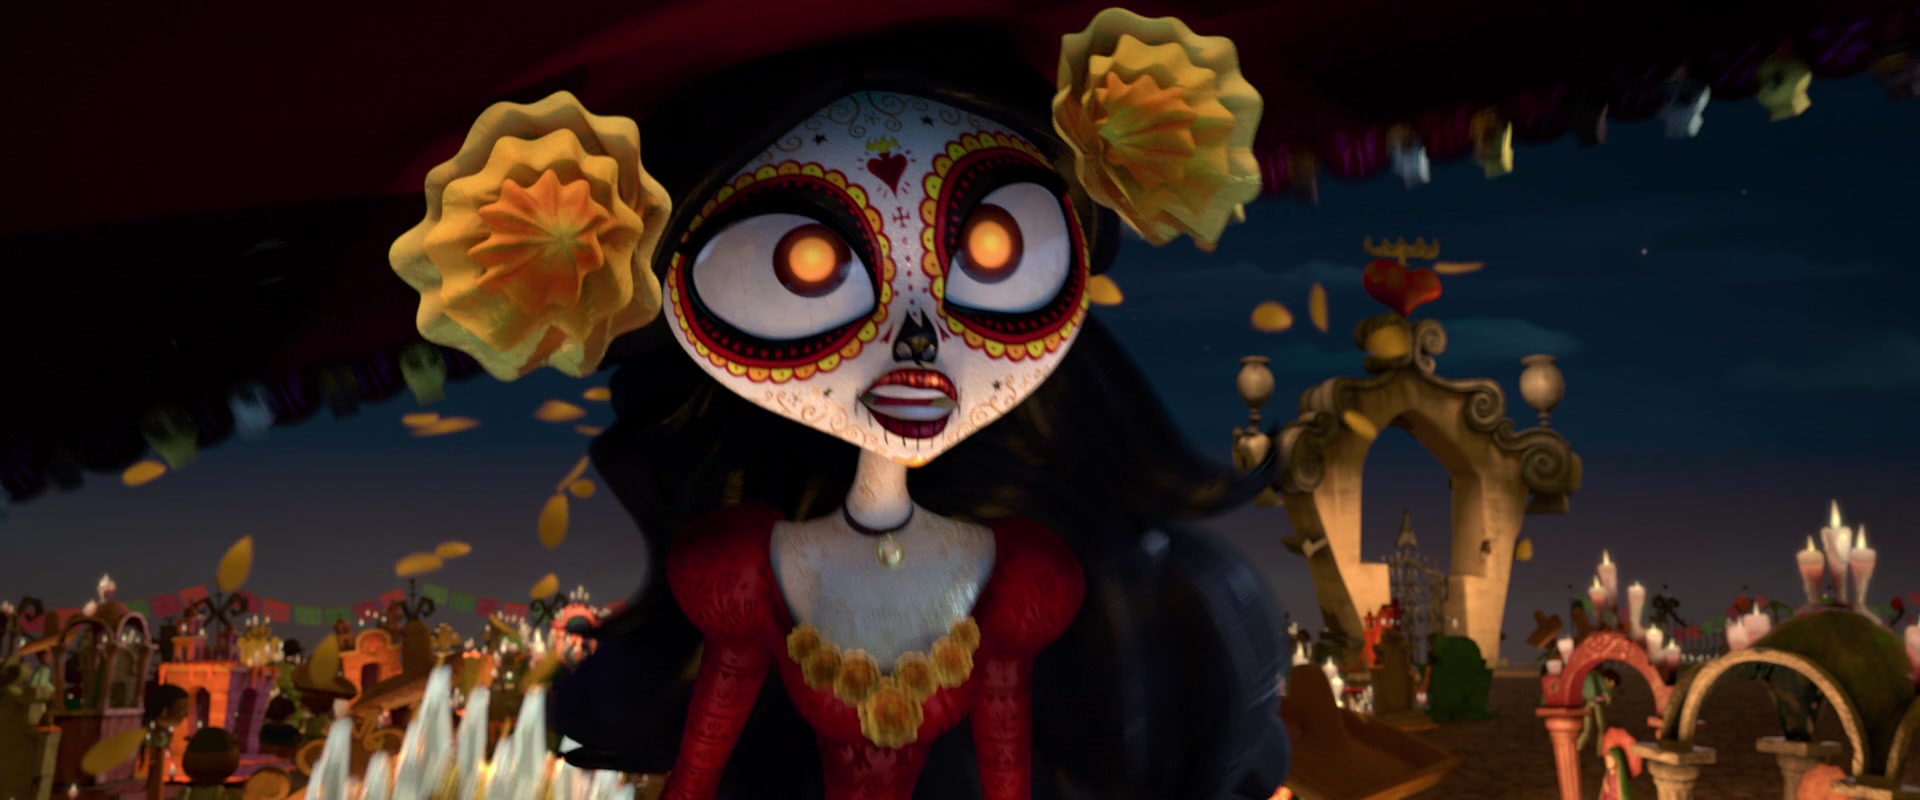 20 Best Animated 3D Movie List - TGIF - This Grandma is Fun